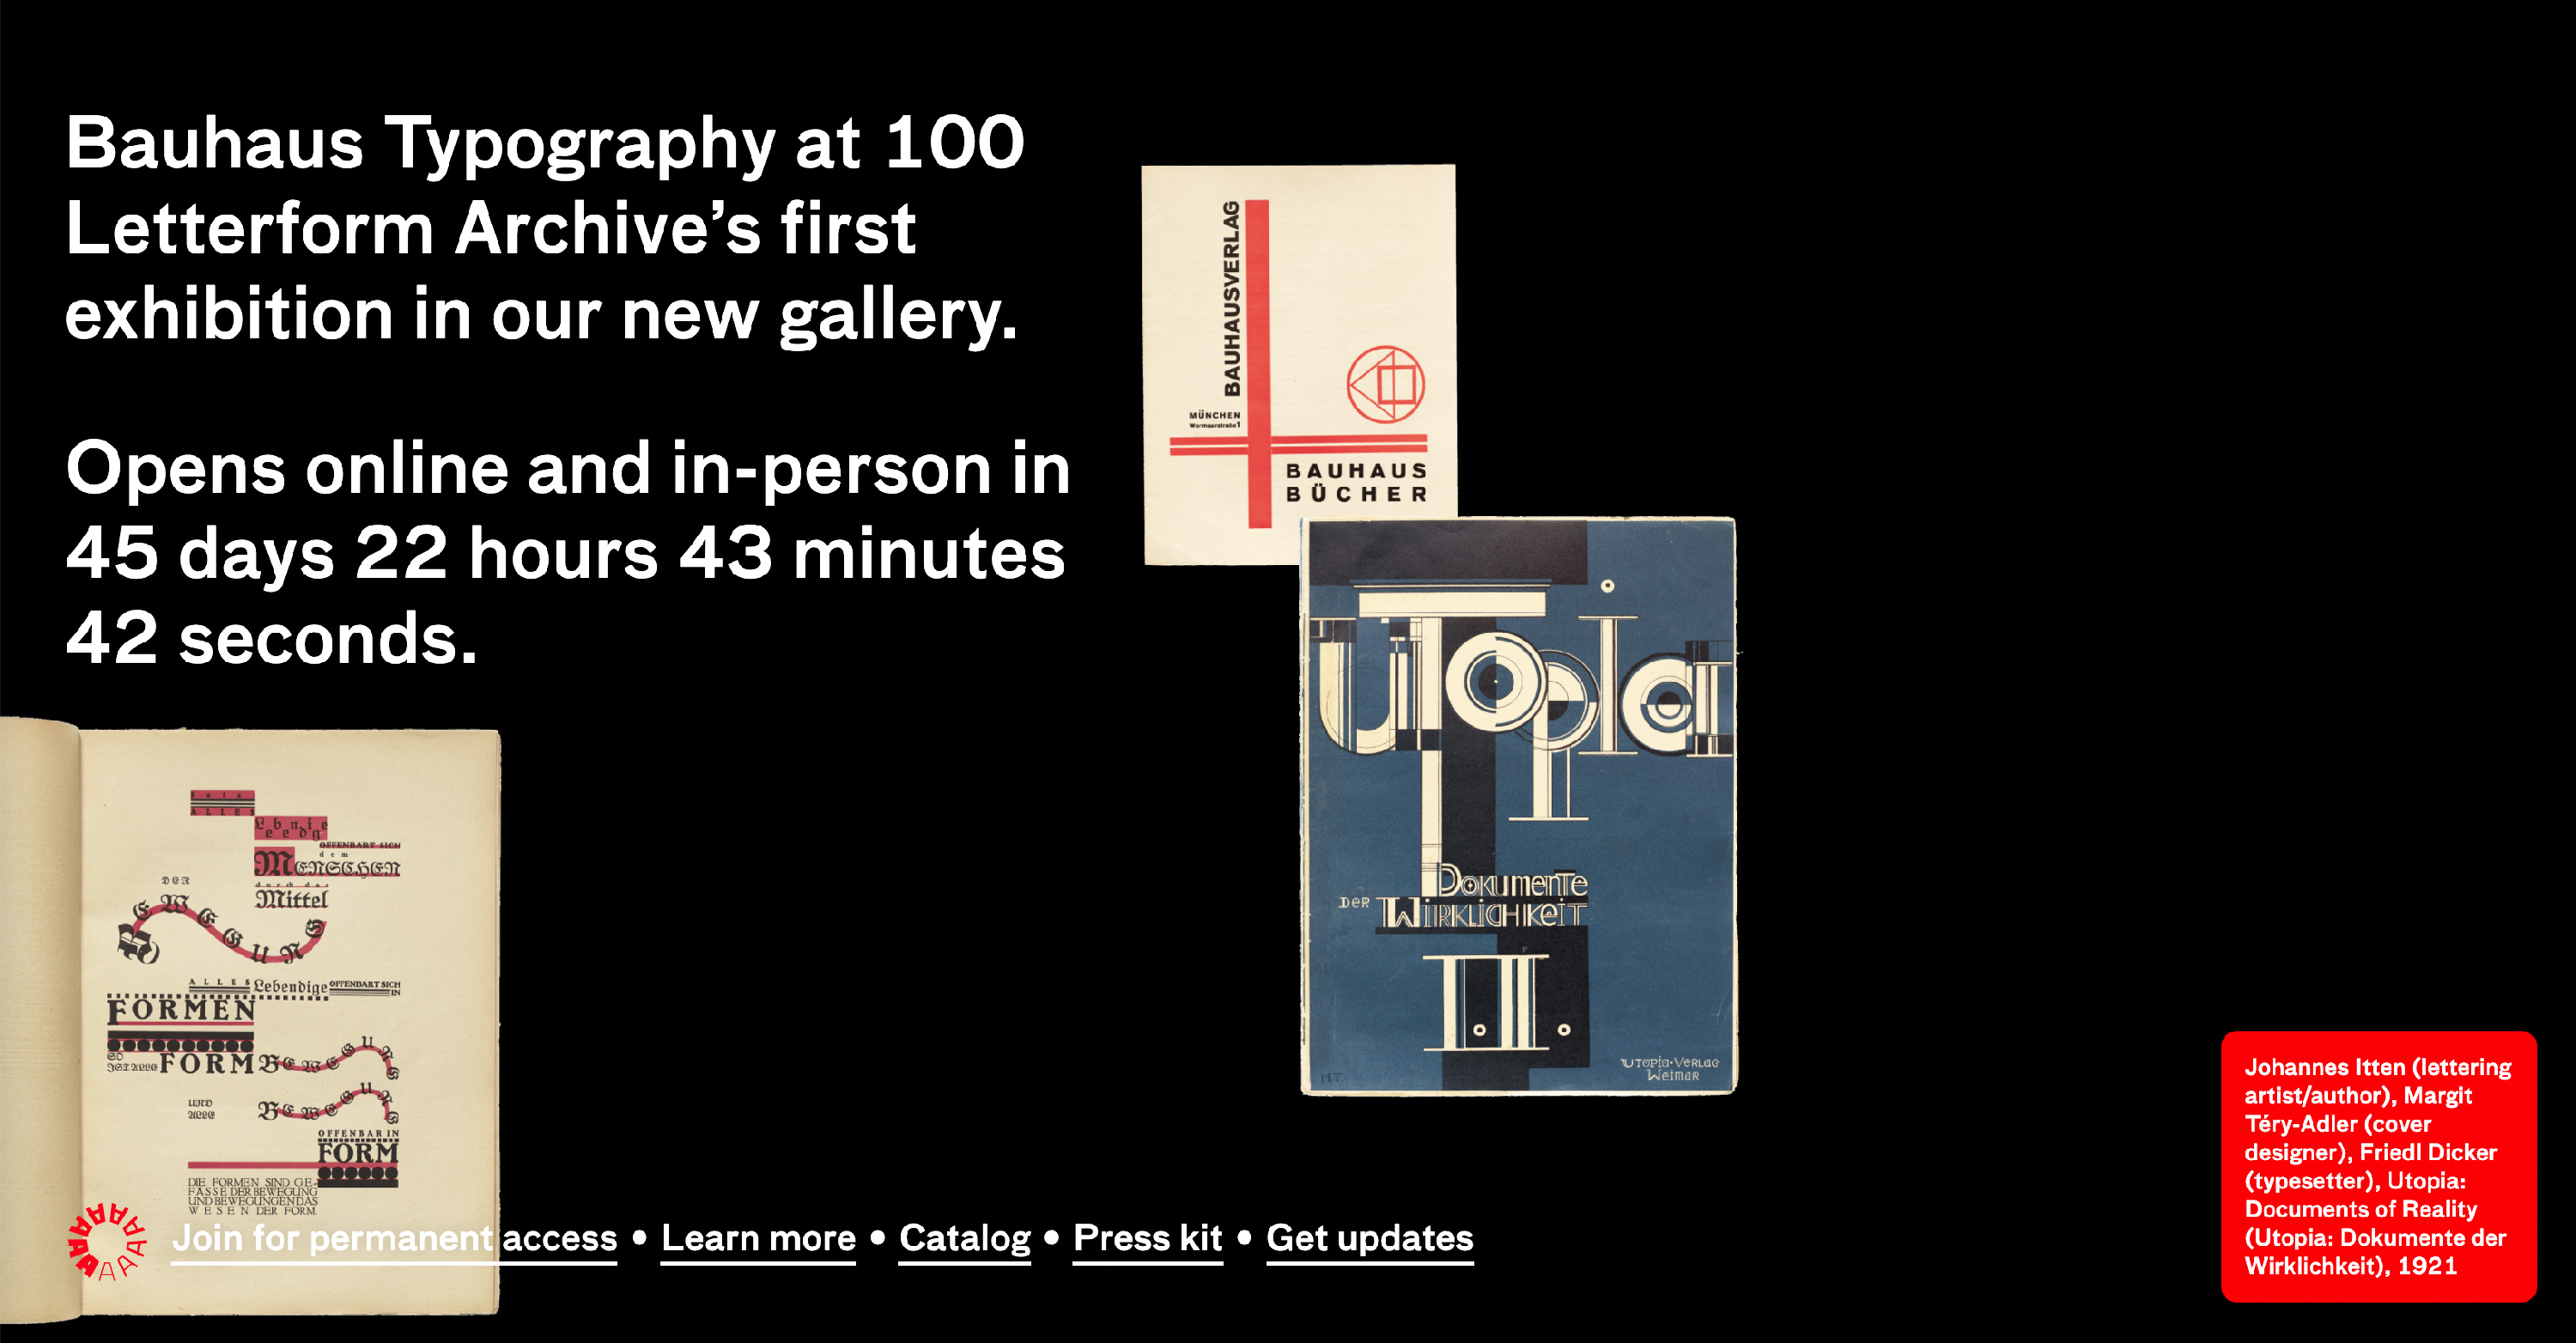 Bauhaus Typography at 100 exhibition website teaser